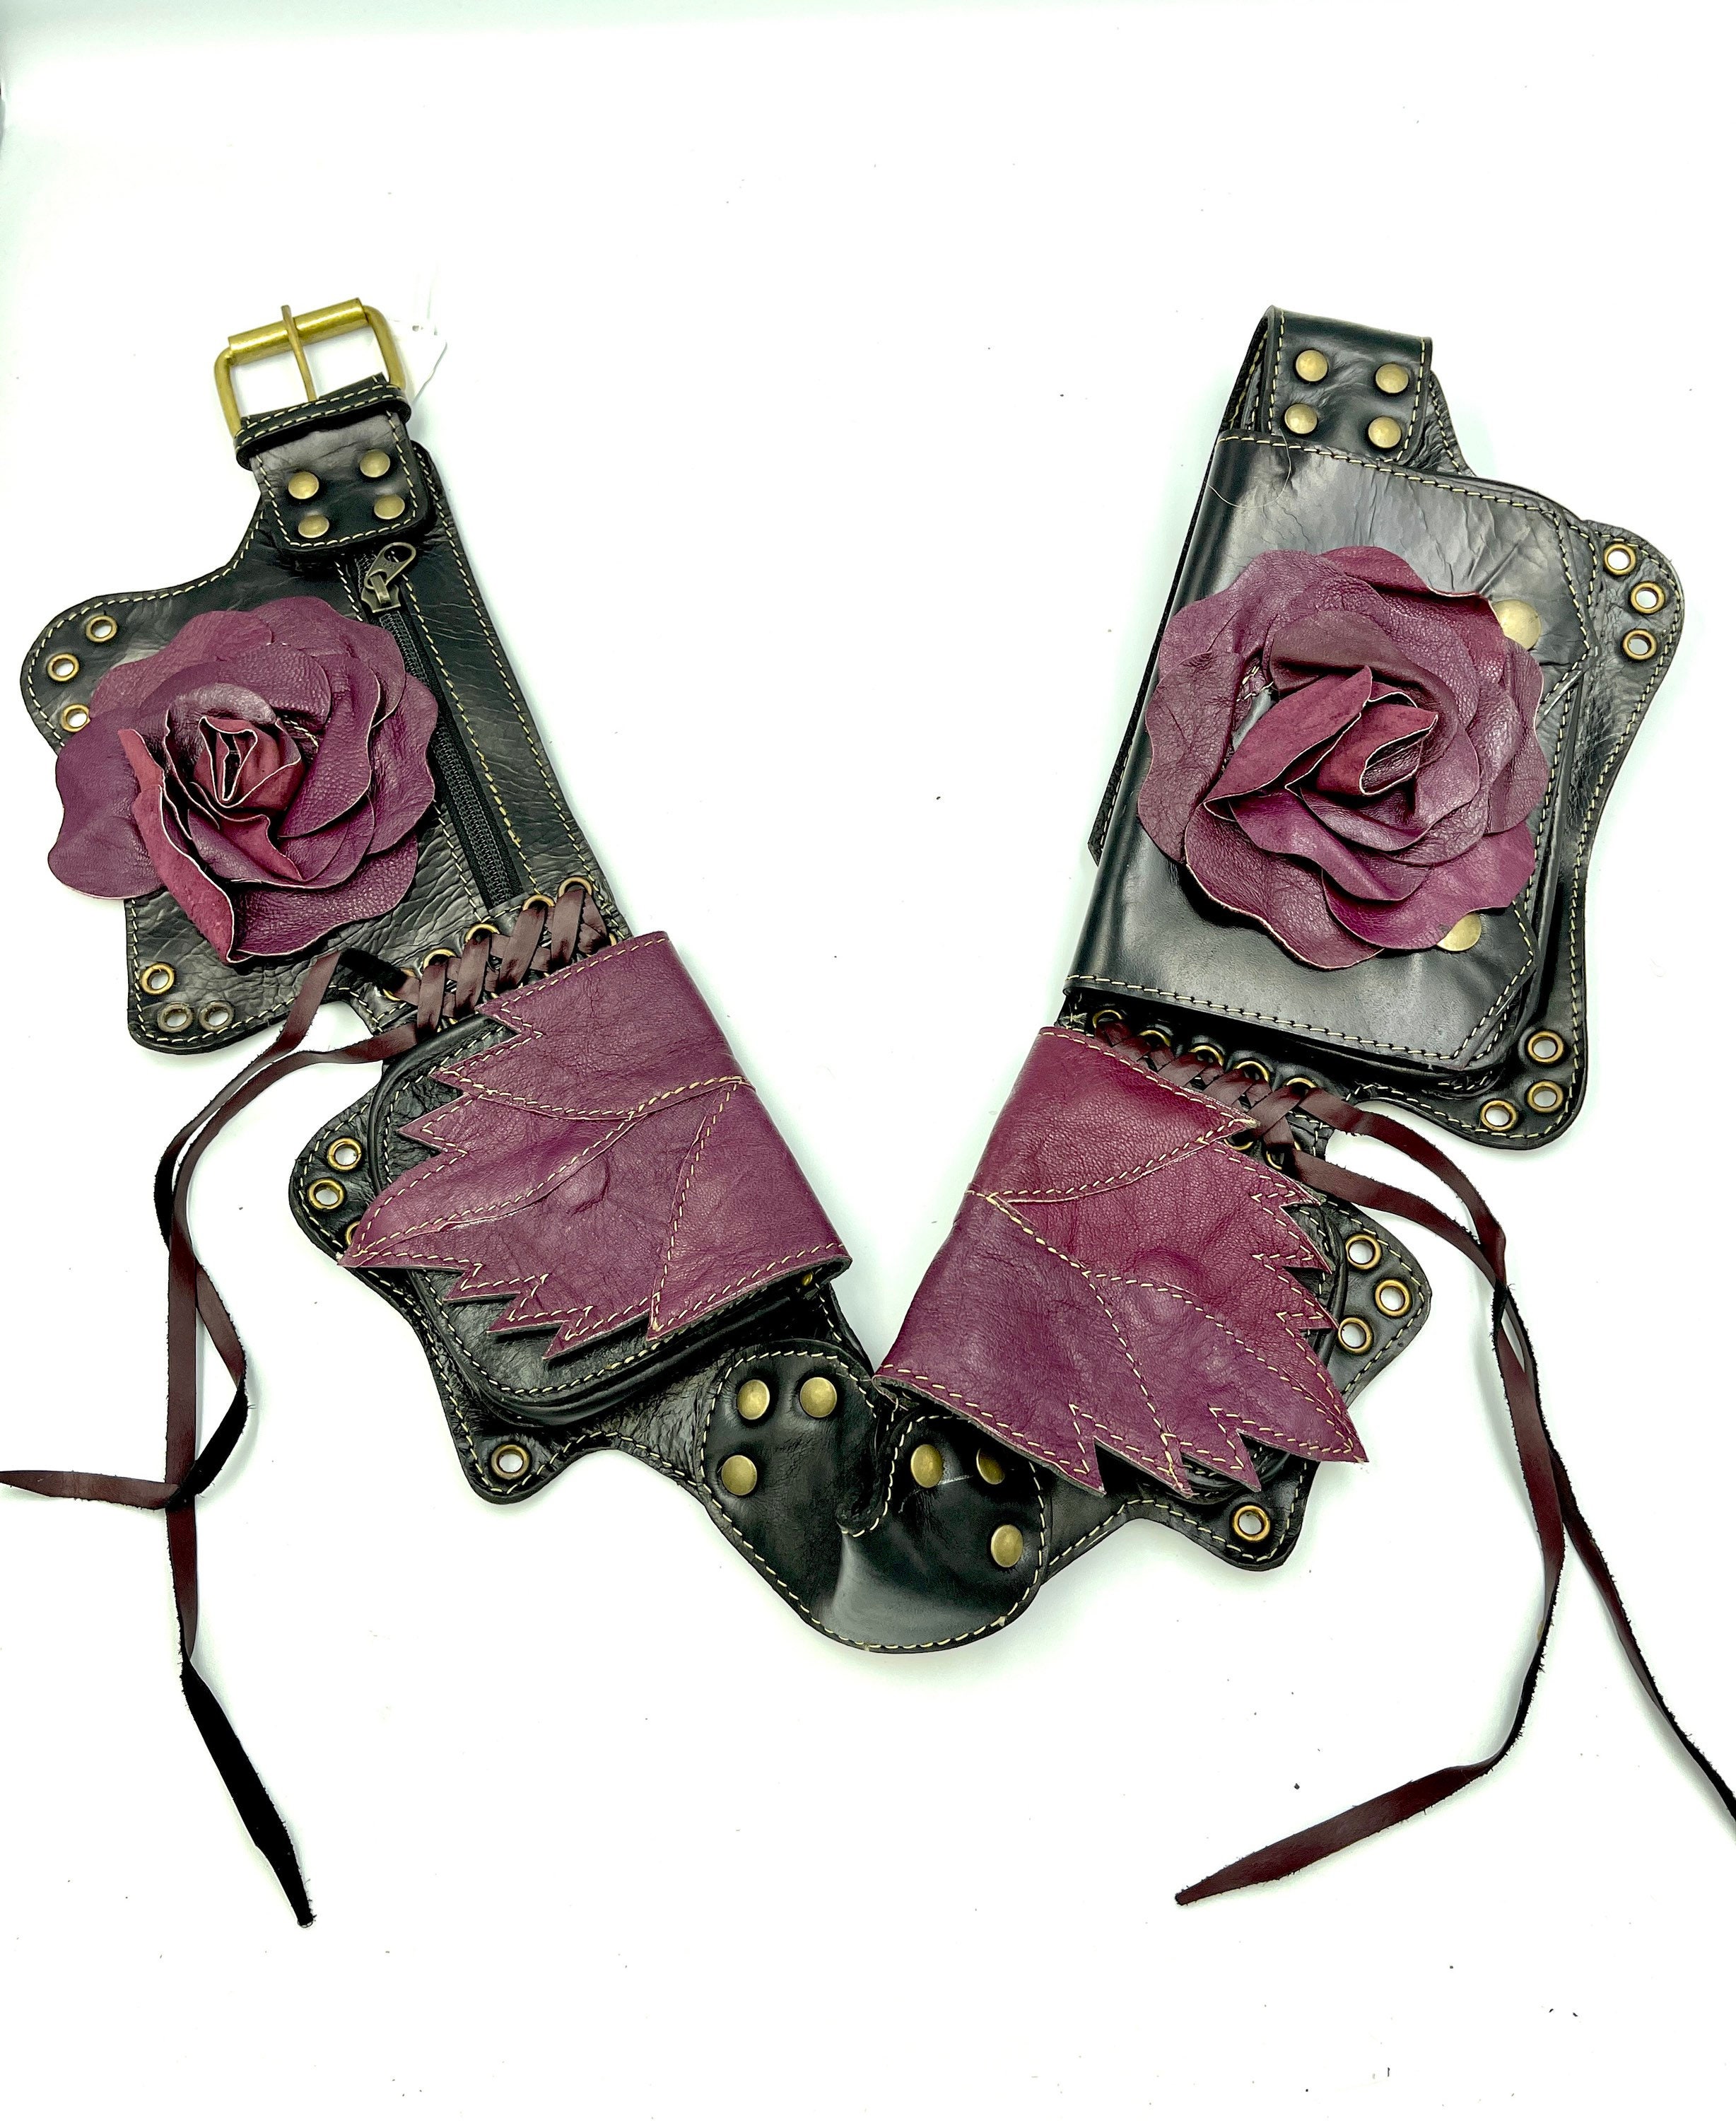 Leather Belt Bag Hip Purse Embroidered purple Rose - SUNSET LEATHER